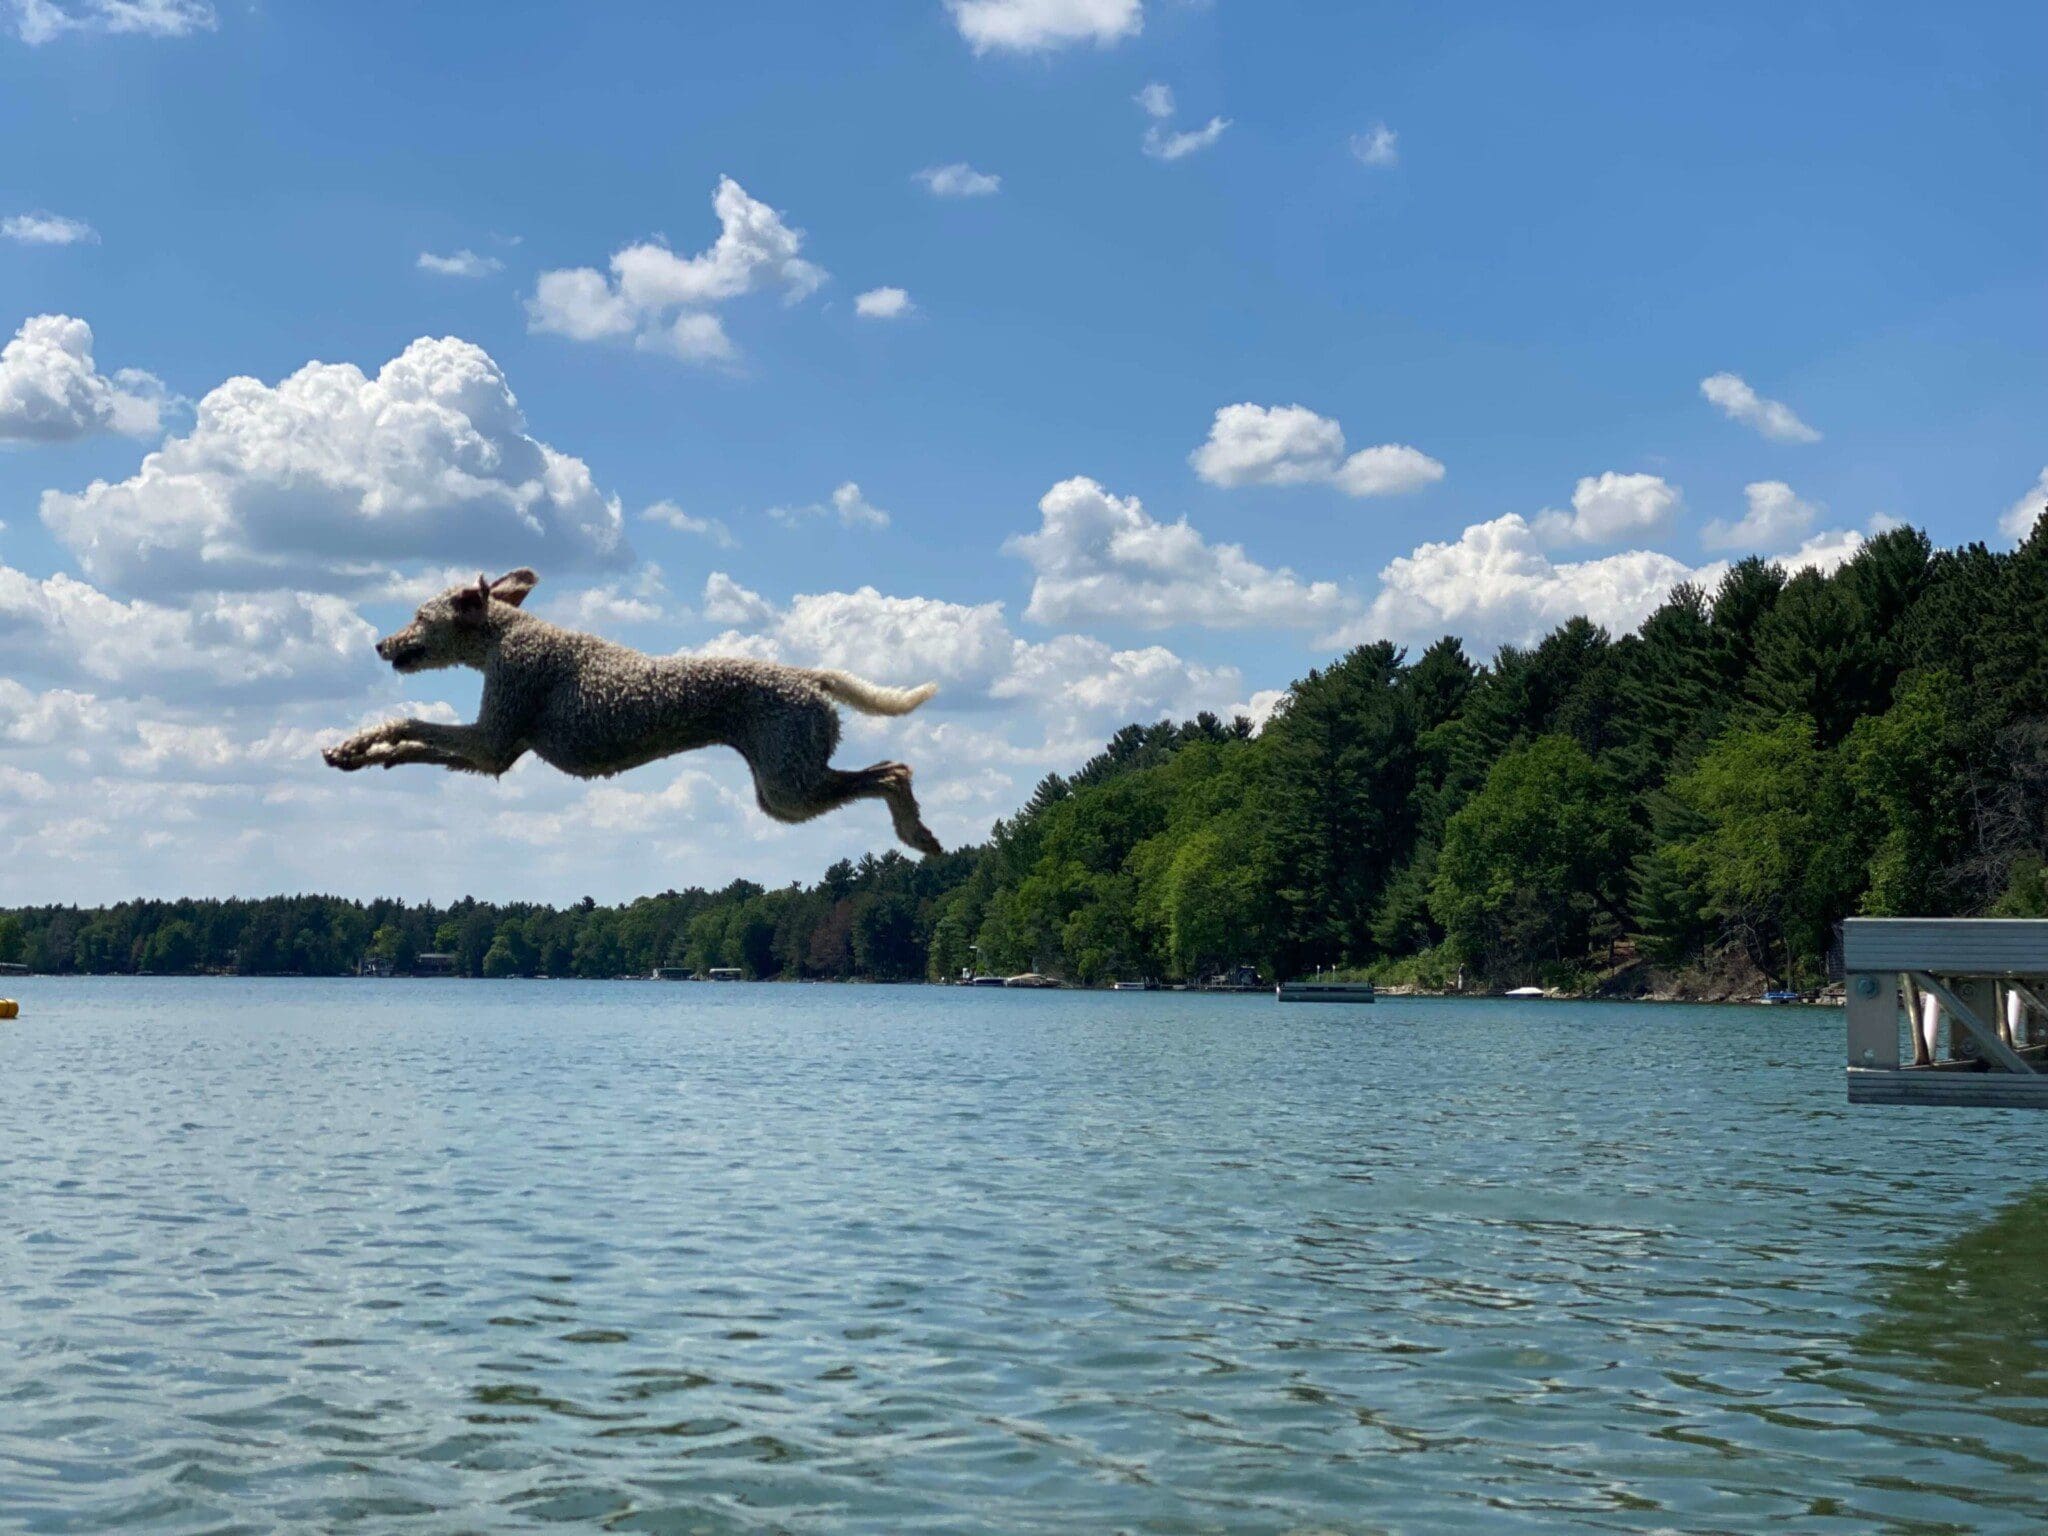 Barlie jumping in the lake